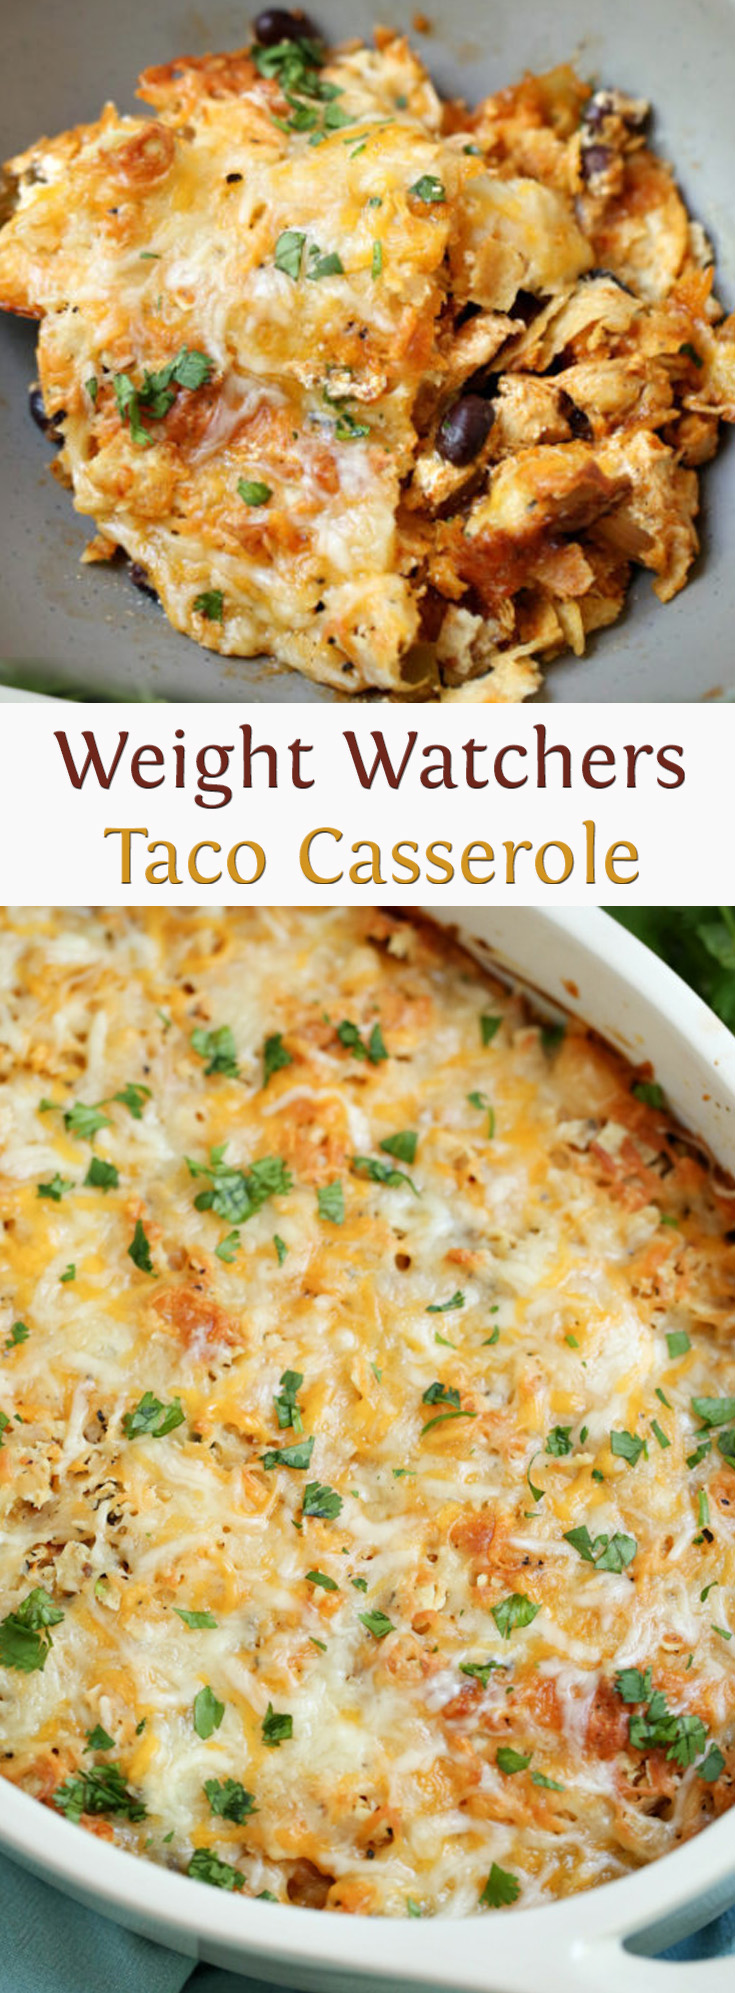 Weight Watchers Taco Casserole